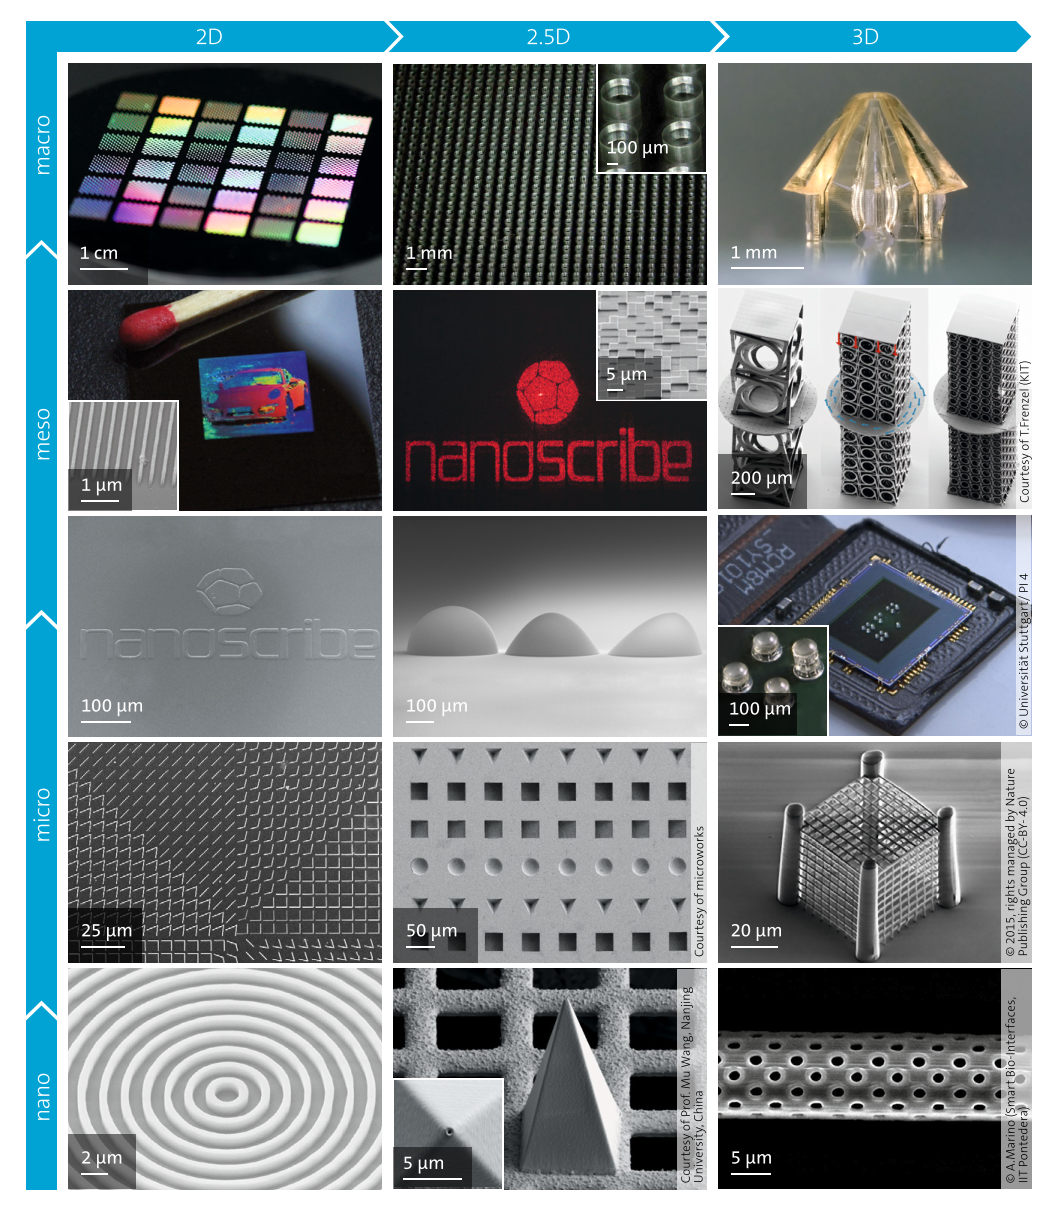 The range of application of the Photonic Professional GT 3D printer. Image via Nanoscribe.